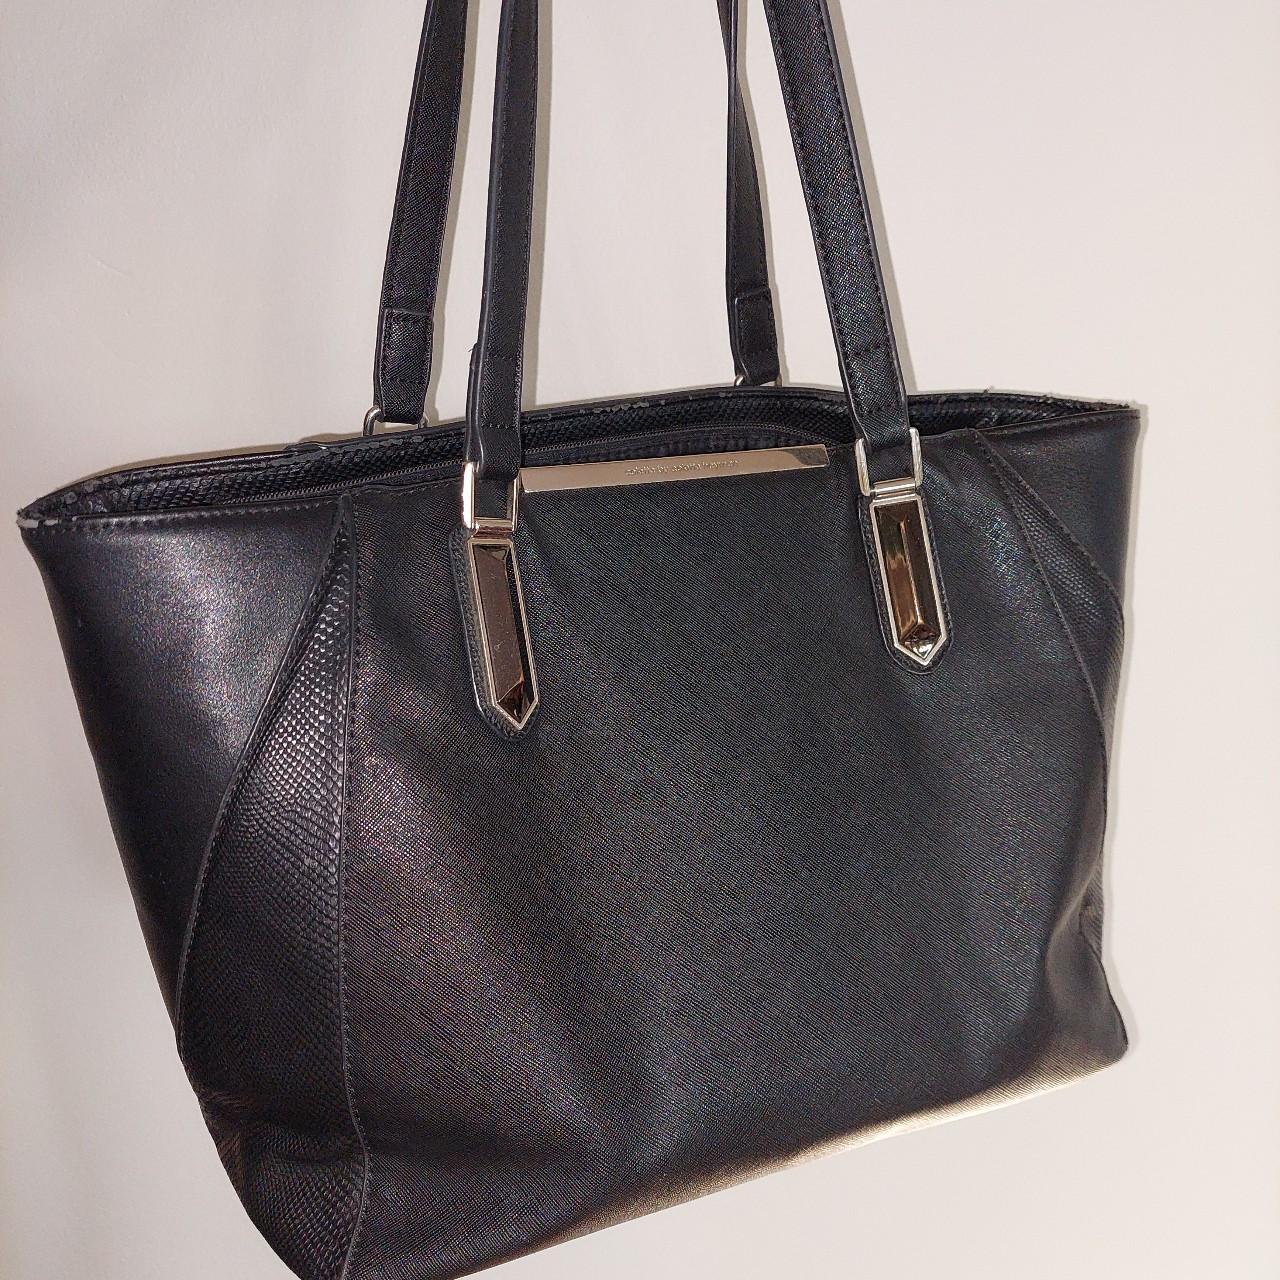 Westfield Hurstville - 50% bag sale now at Colette by Colette Hayman! Last  chance don't miss out. | Facebook